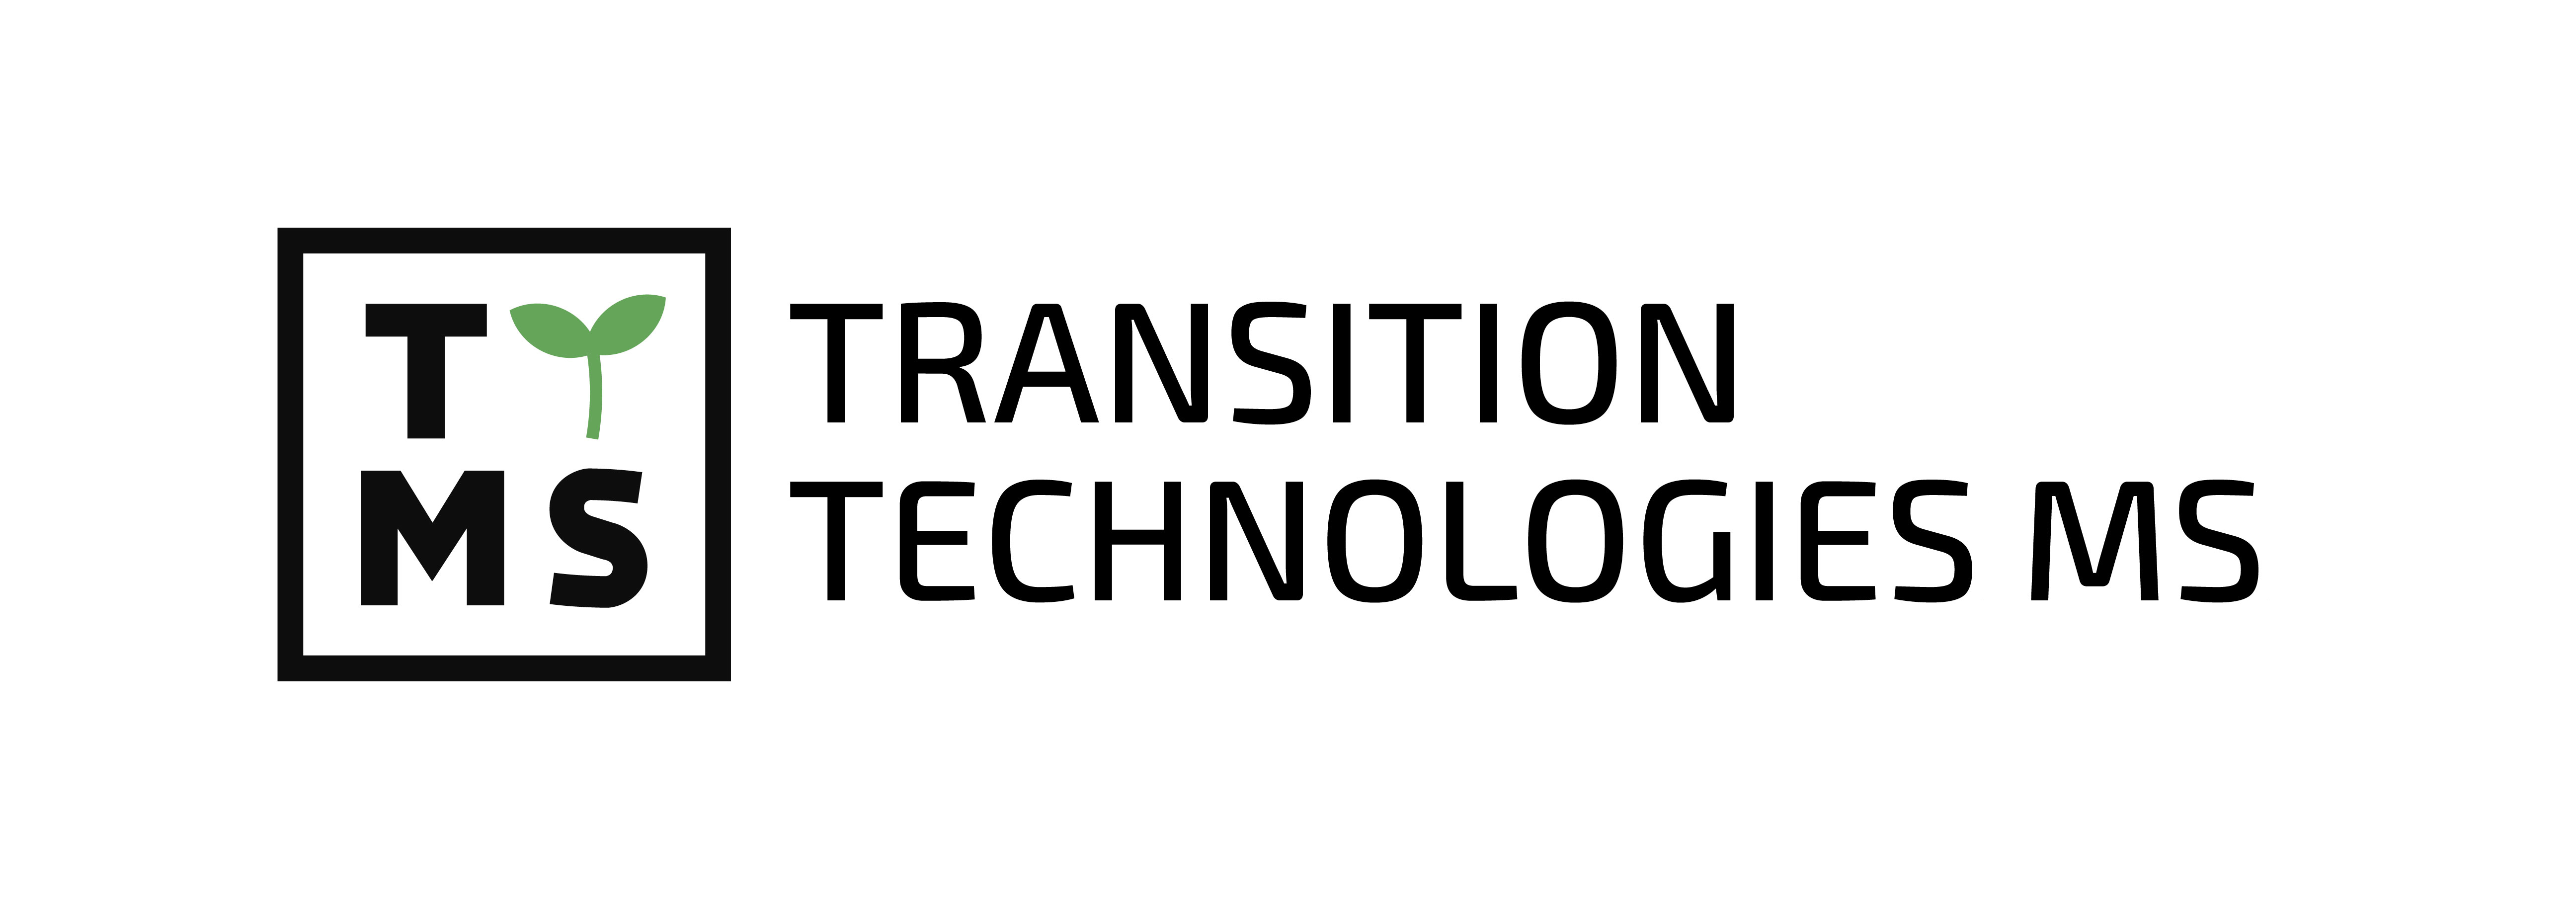 Transition Tech